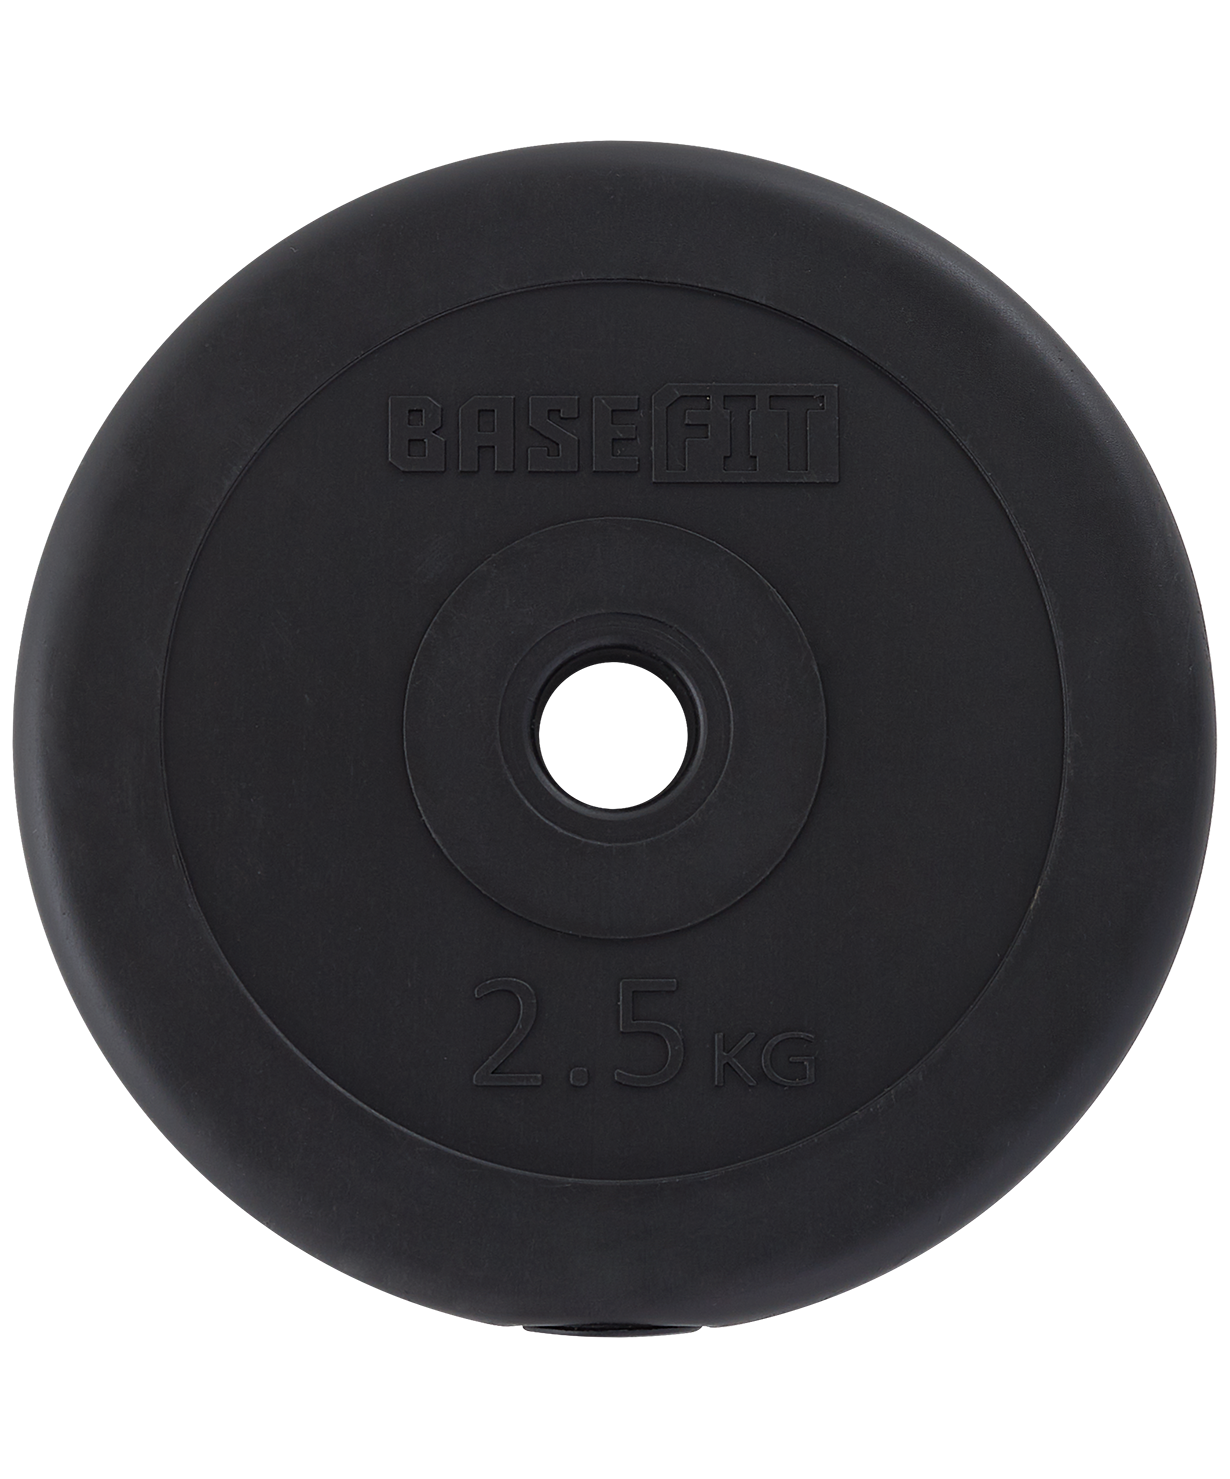 Диск для штанги BaseFit BB-203 2,5 кг, 26 мм